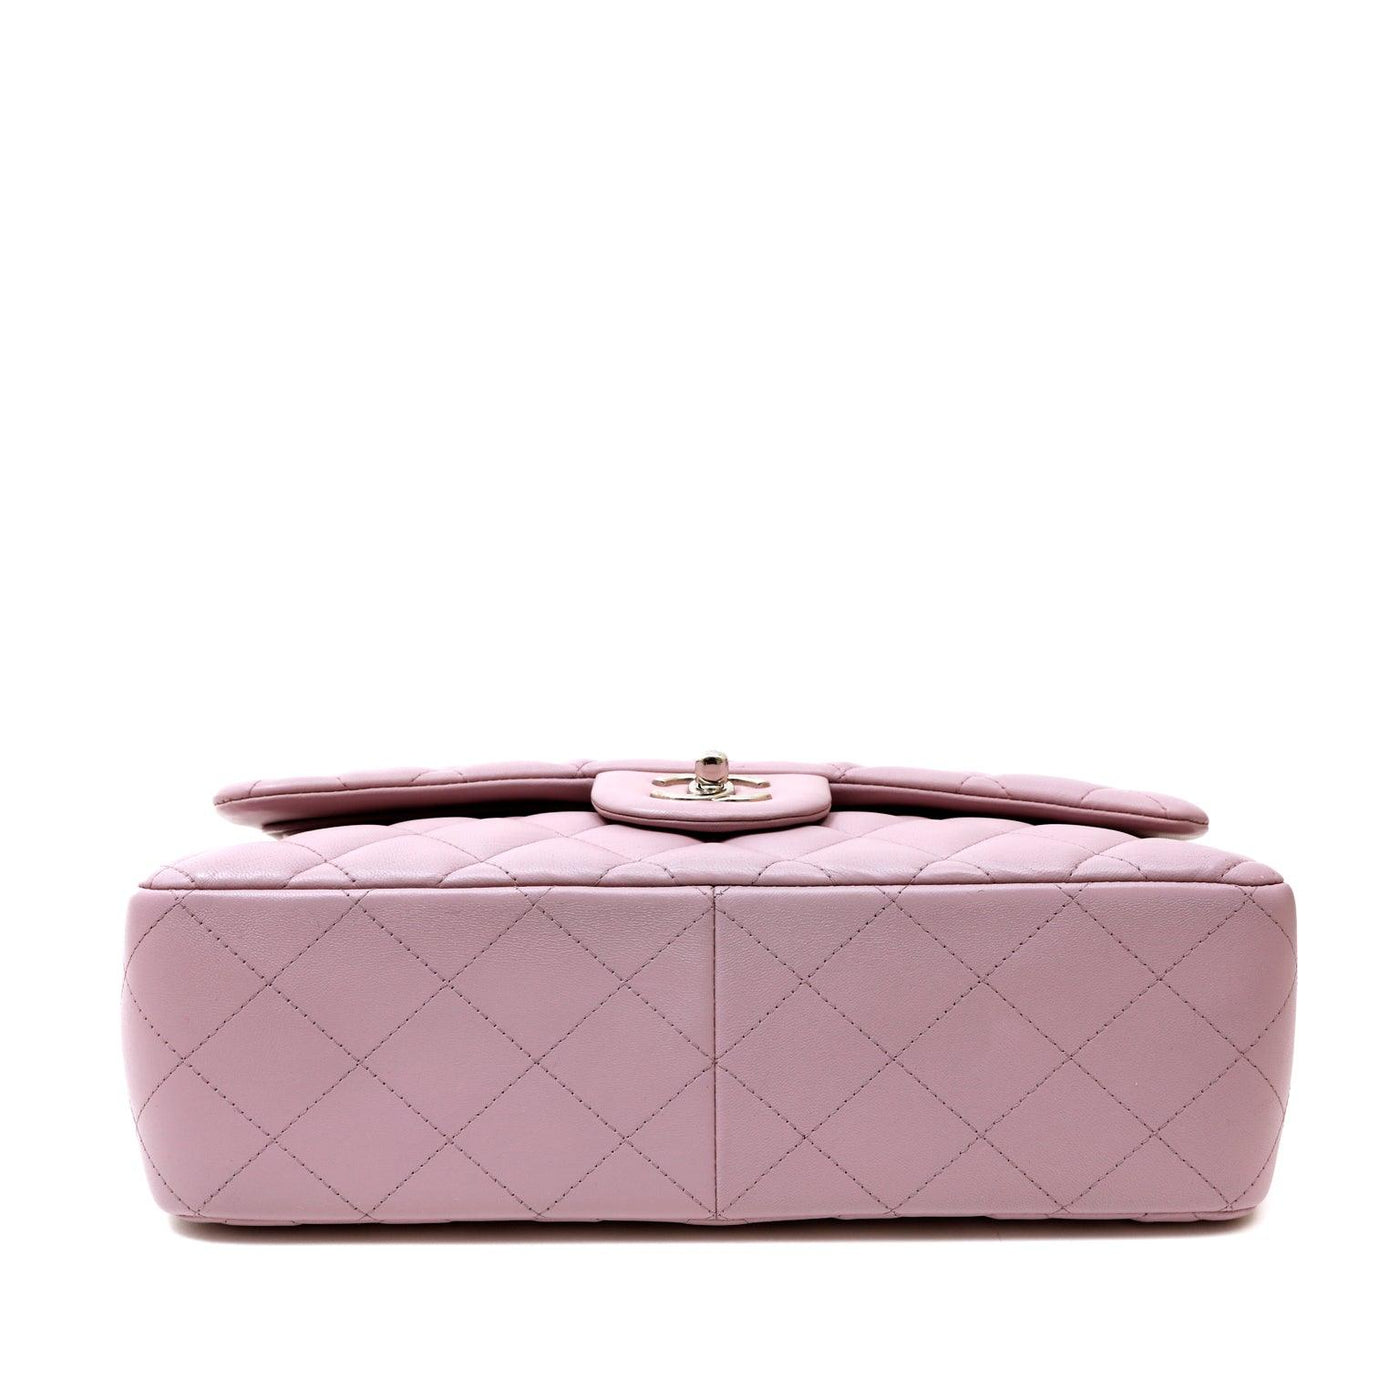 Chanel Lavender Lambskin Jumbo Classic Flap - Only Authentics